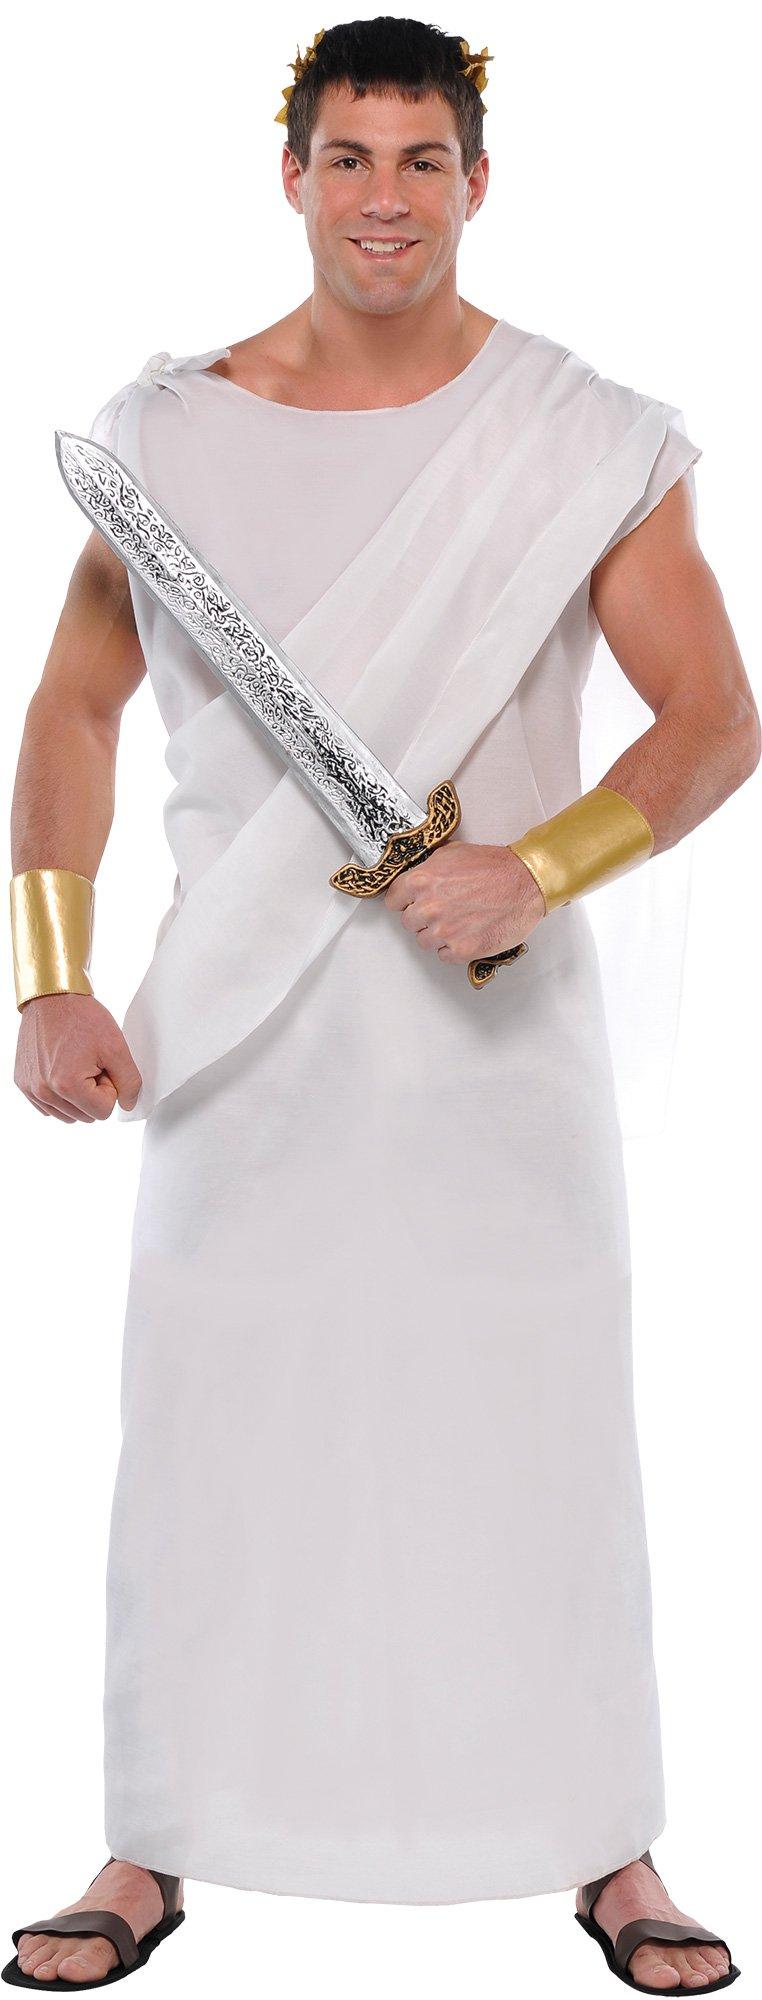 greek gods costumes for kids